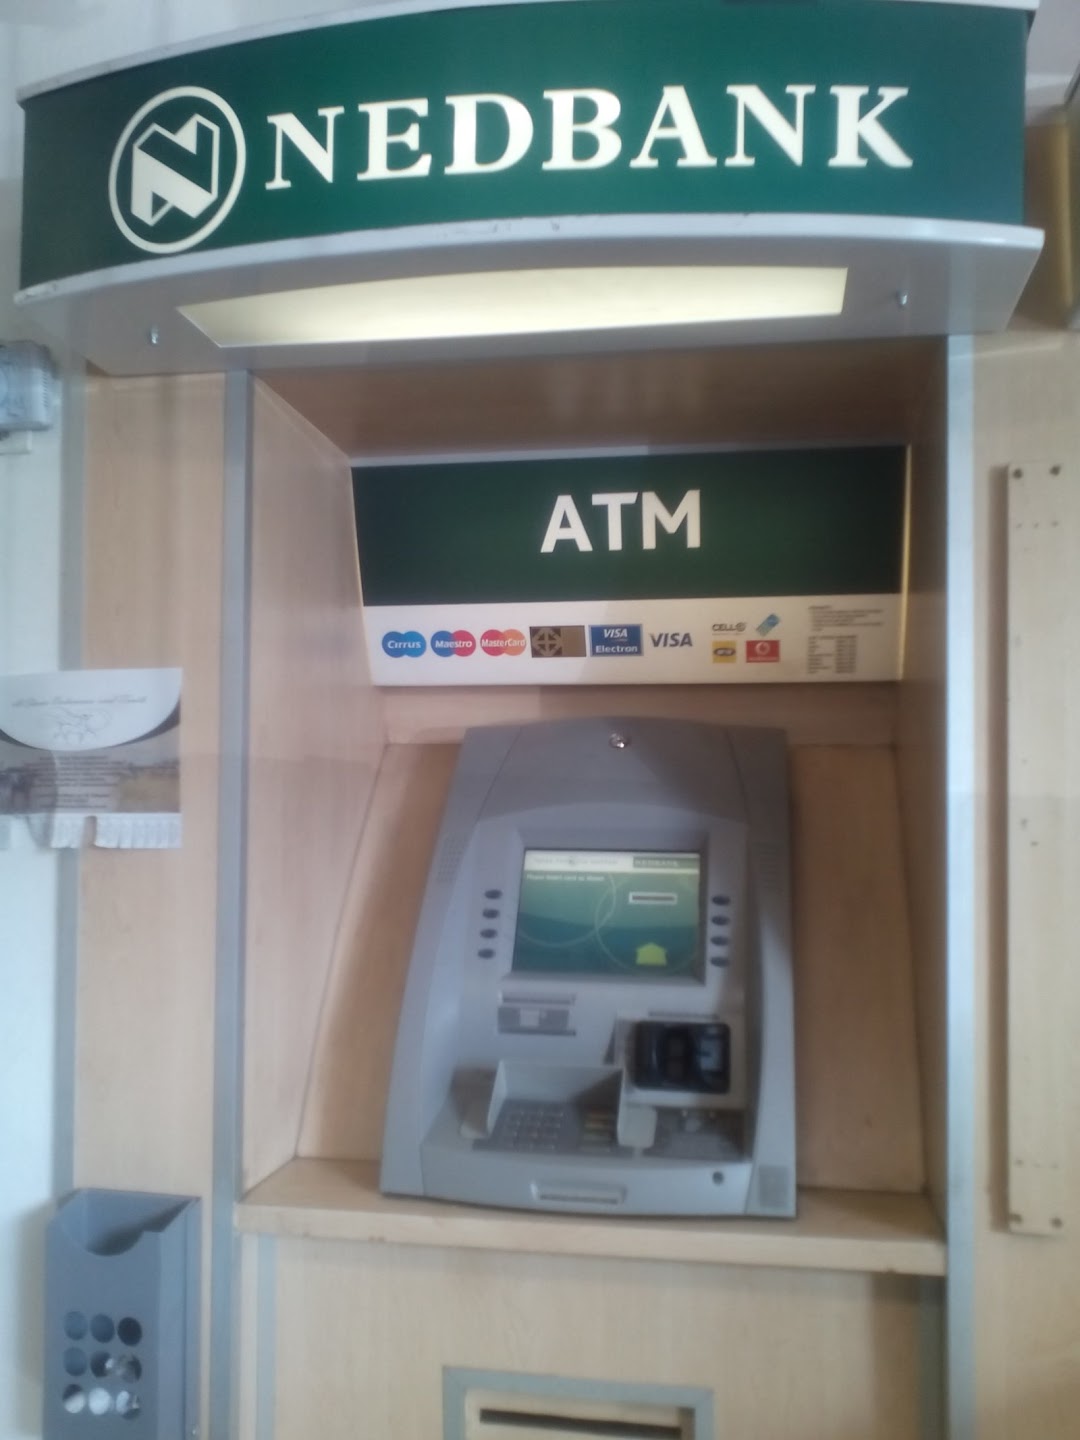 Nedbank ATM Engen Oxford